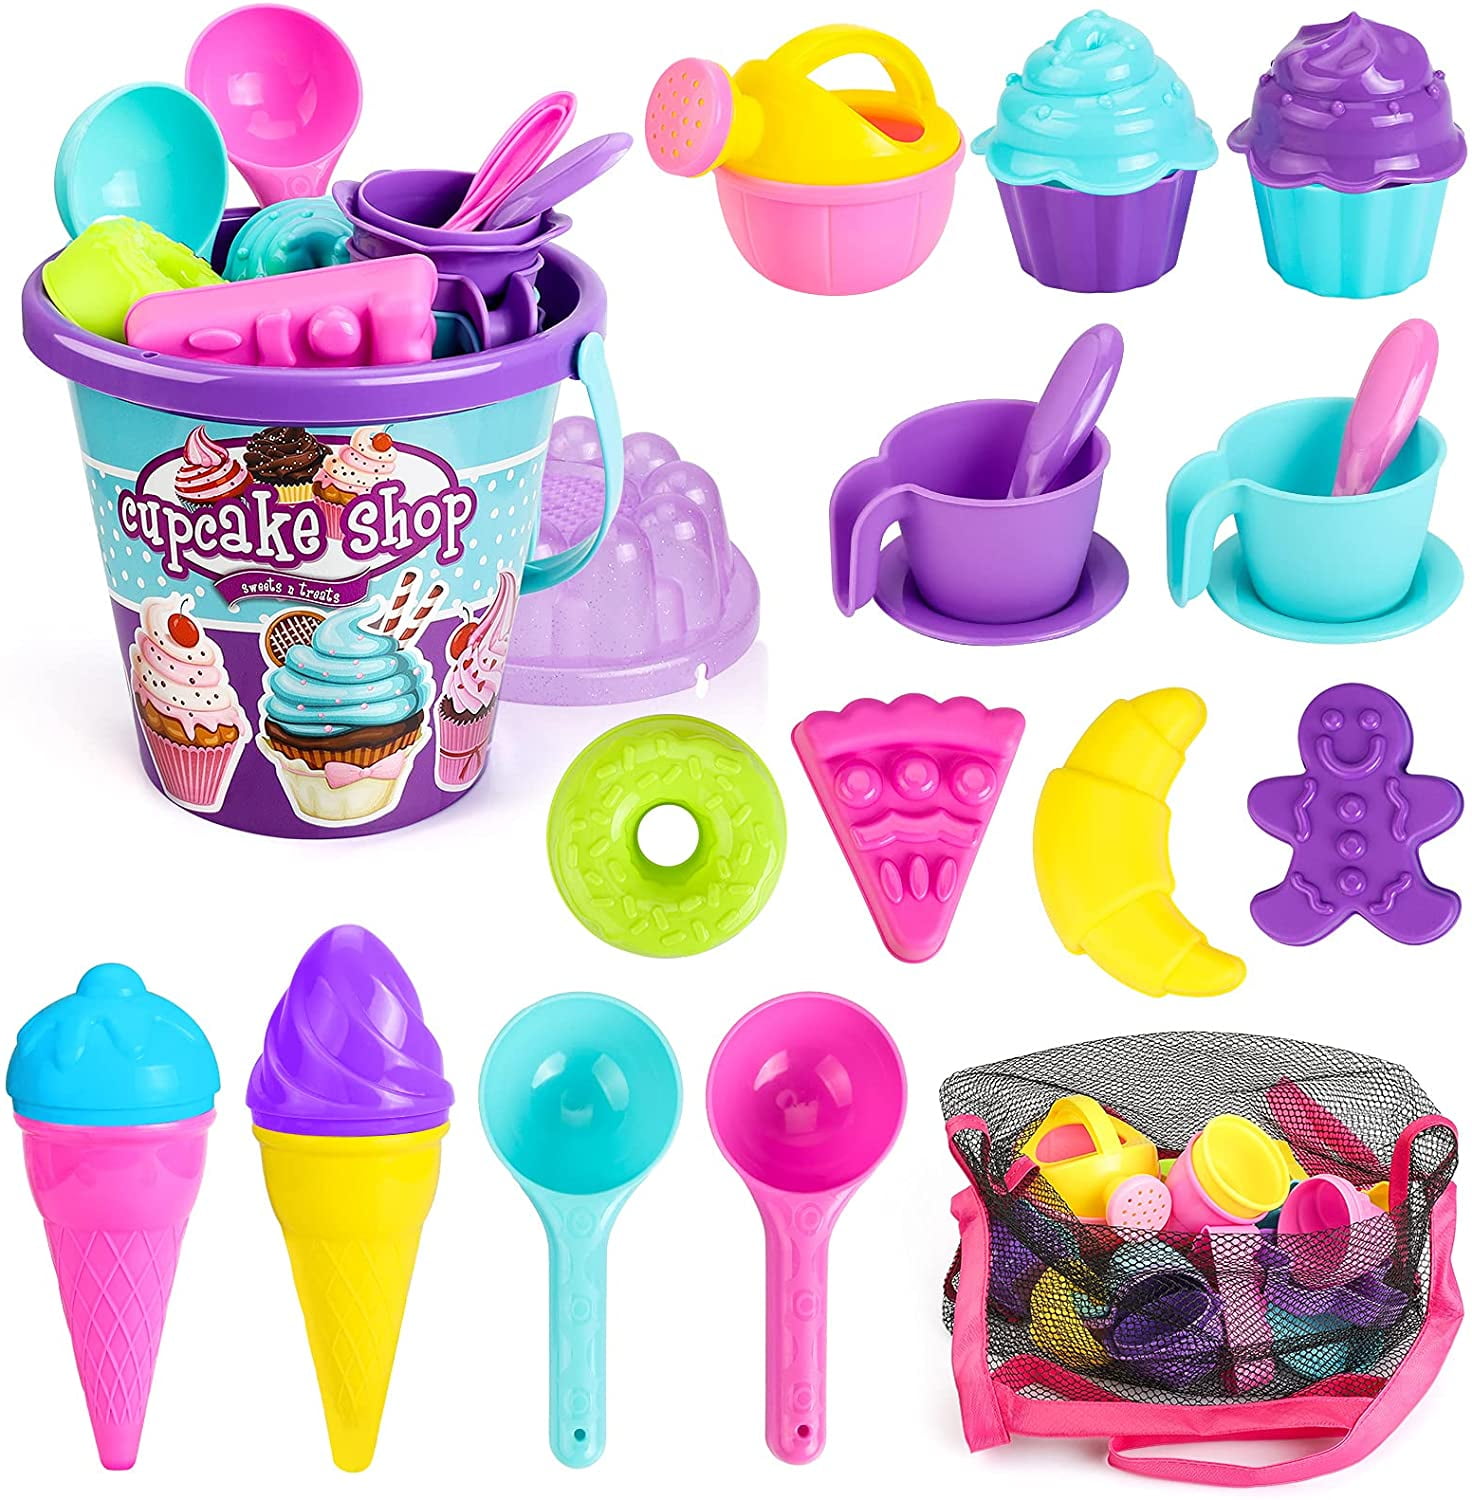 8 Toy Cupcakes Children Pretend Play Kitchen & Shop Mould Set bath pool Sandpit 